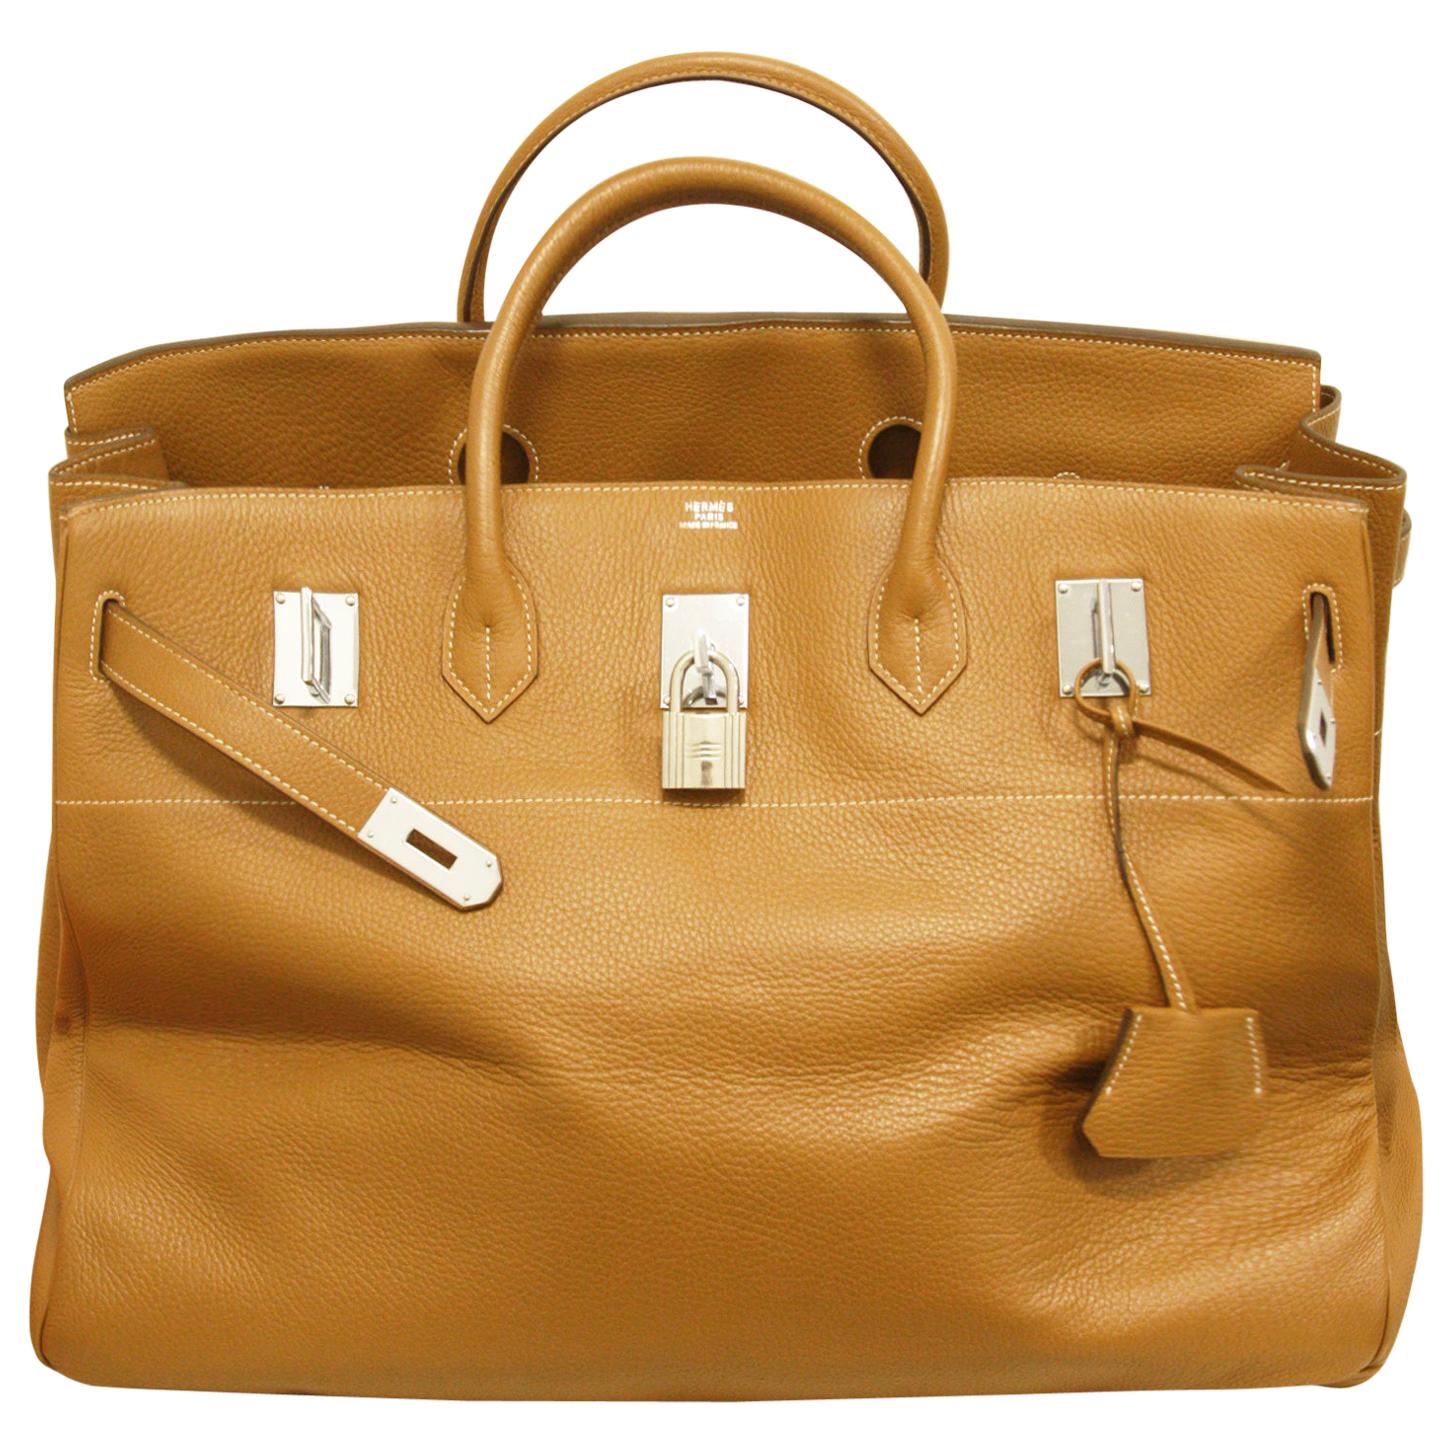 Hermès Birkin 50cm Brown Togo Leather Tote For Sale